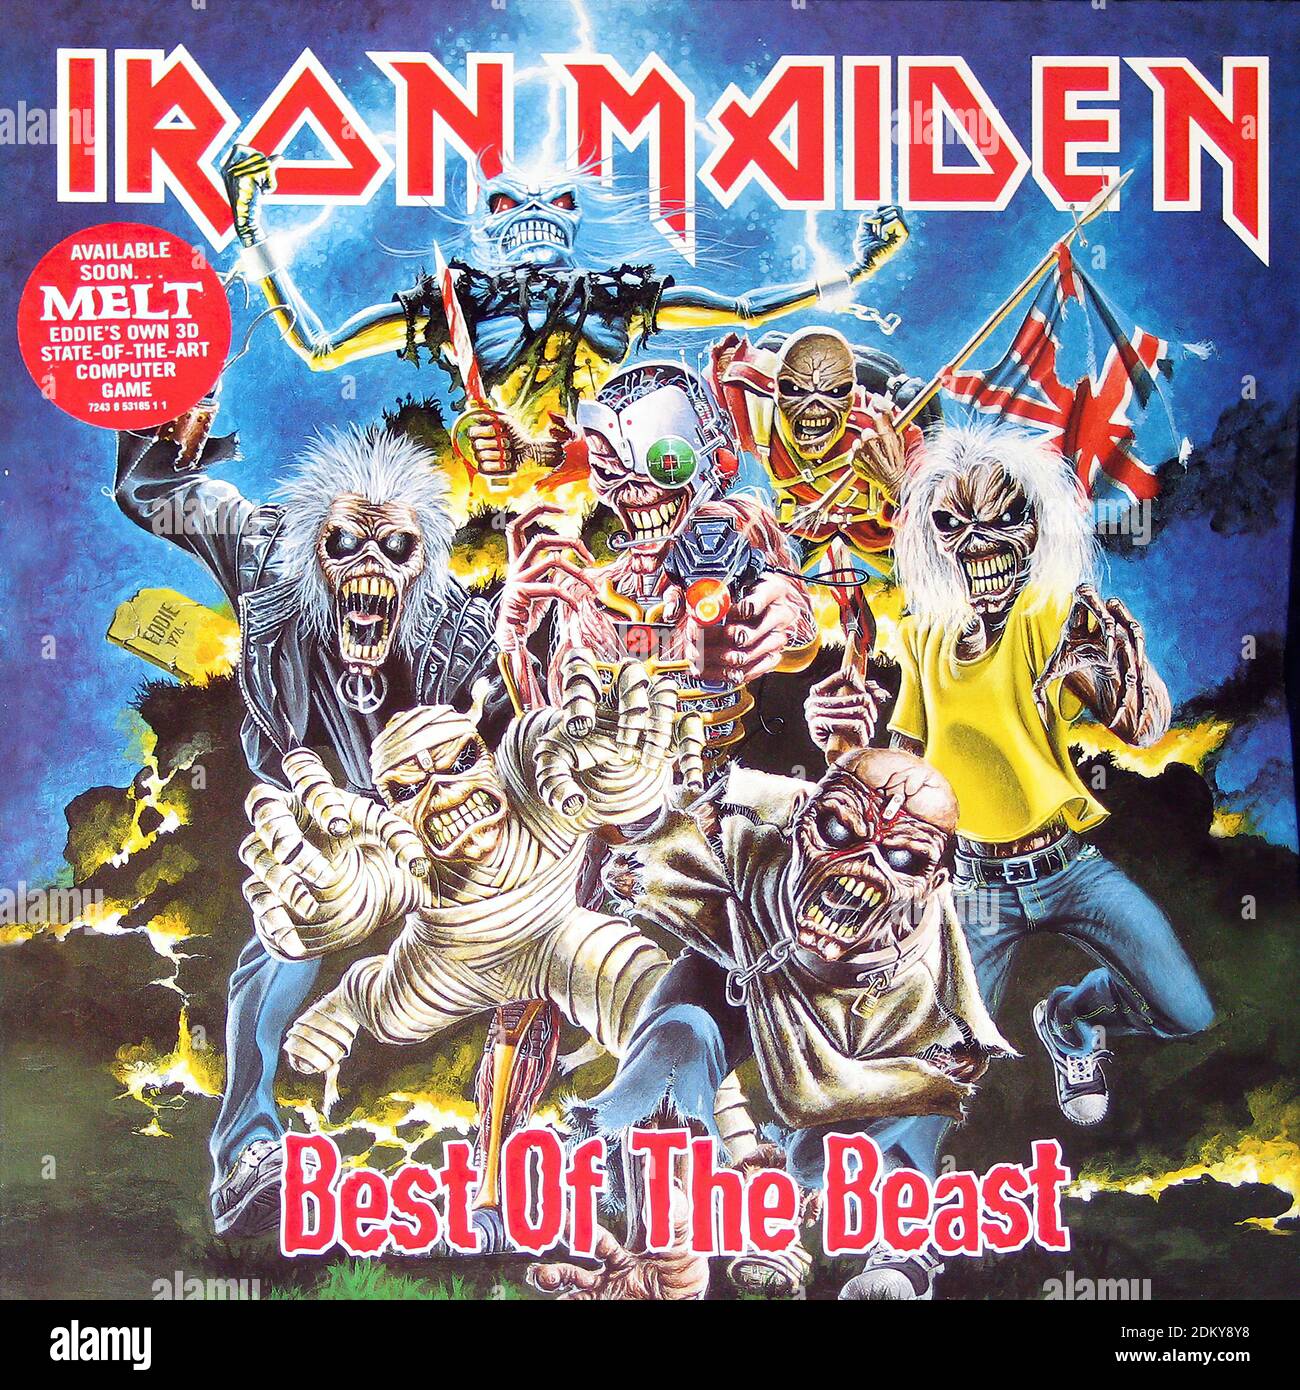 Iron Maiden Best of the Beast 06 - vinile d'epoca Registrare la copertina Foto Stock